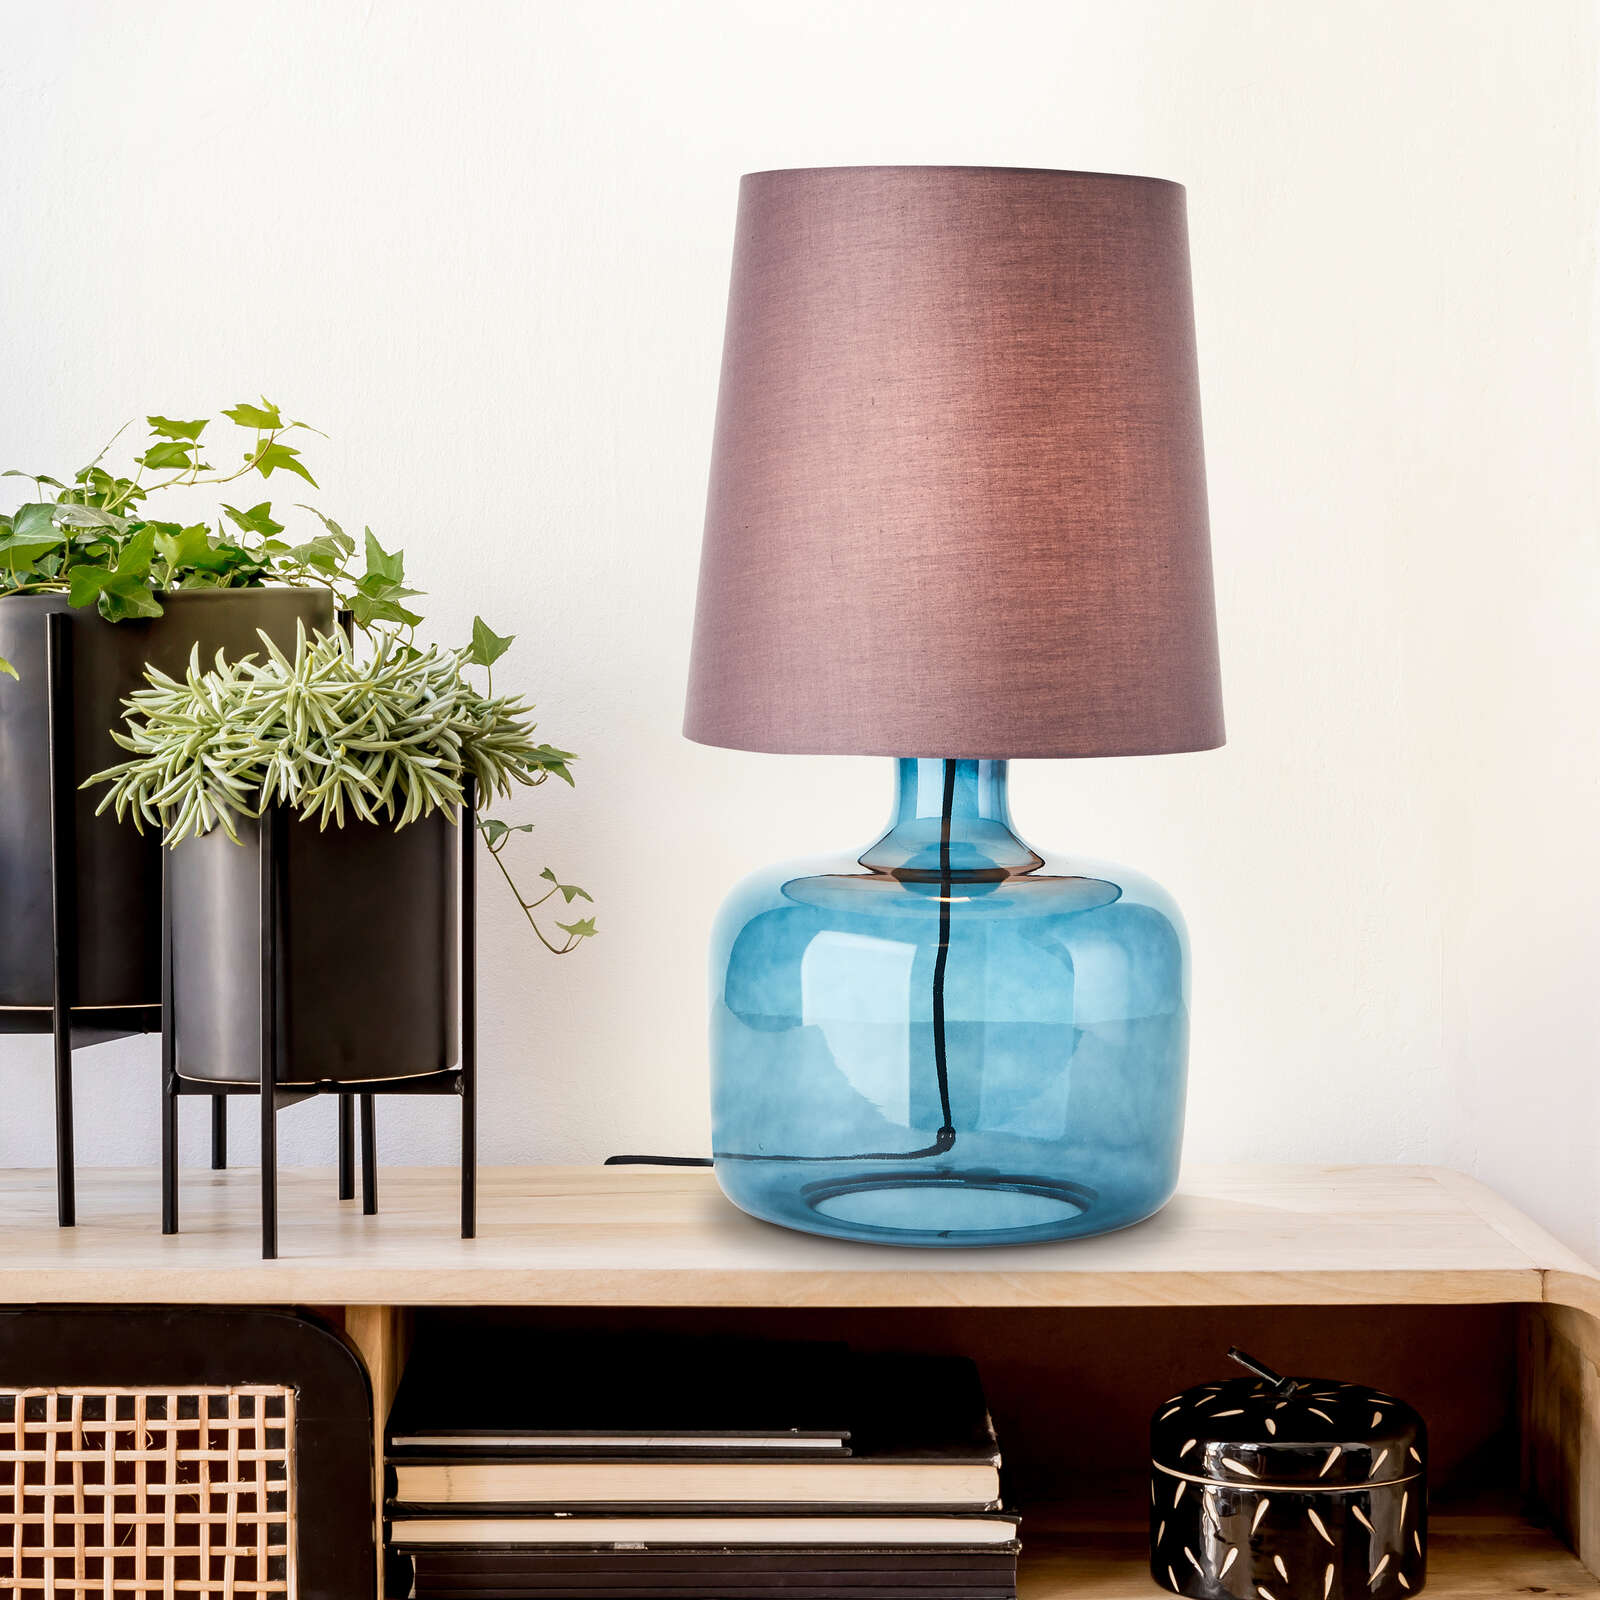             Textile table lamp - Jana 3 - Blue
        